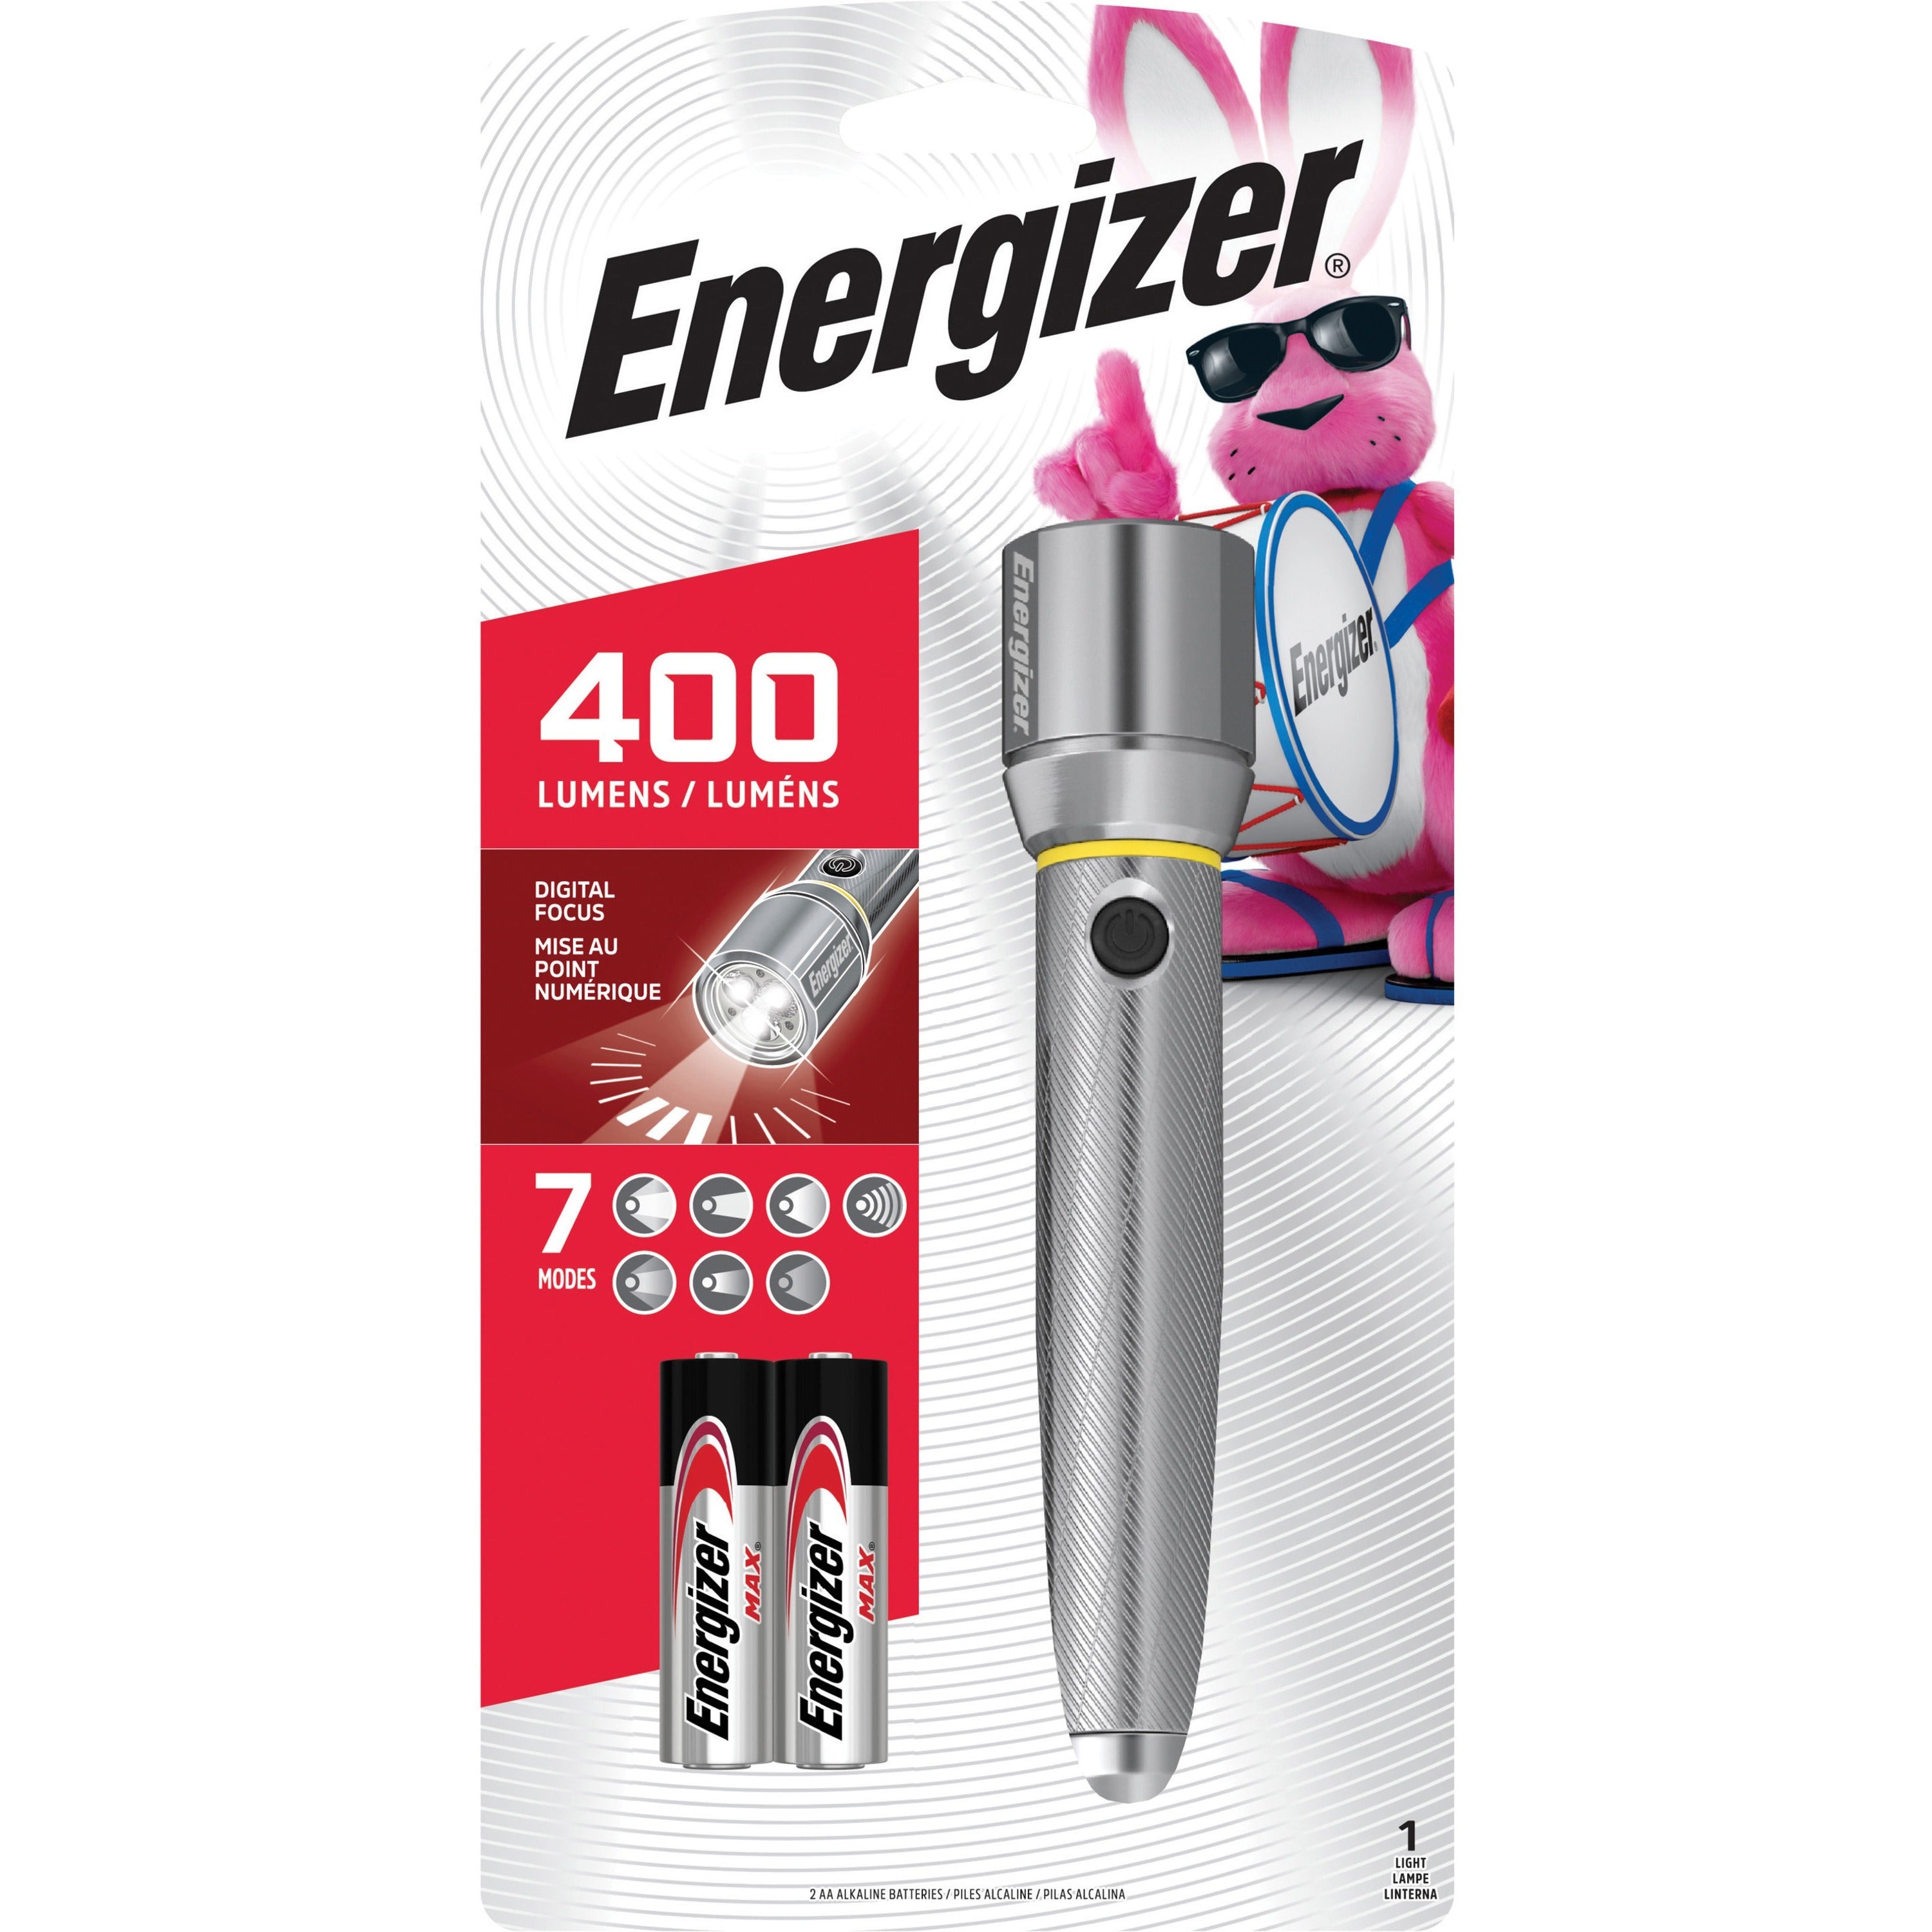 energizer-vision-hd-performance-metal-flashlight-with-digital-focus-led-400-lm-lumen-2-x-aa-battery-metal-water-resistant-chrome_eveepmzh21e - 1